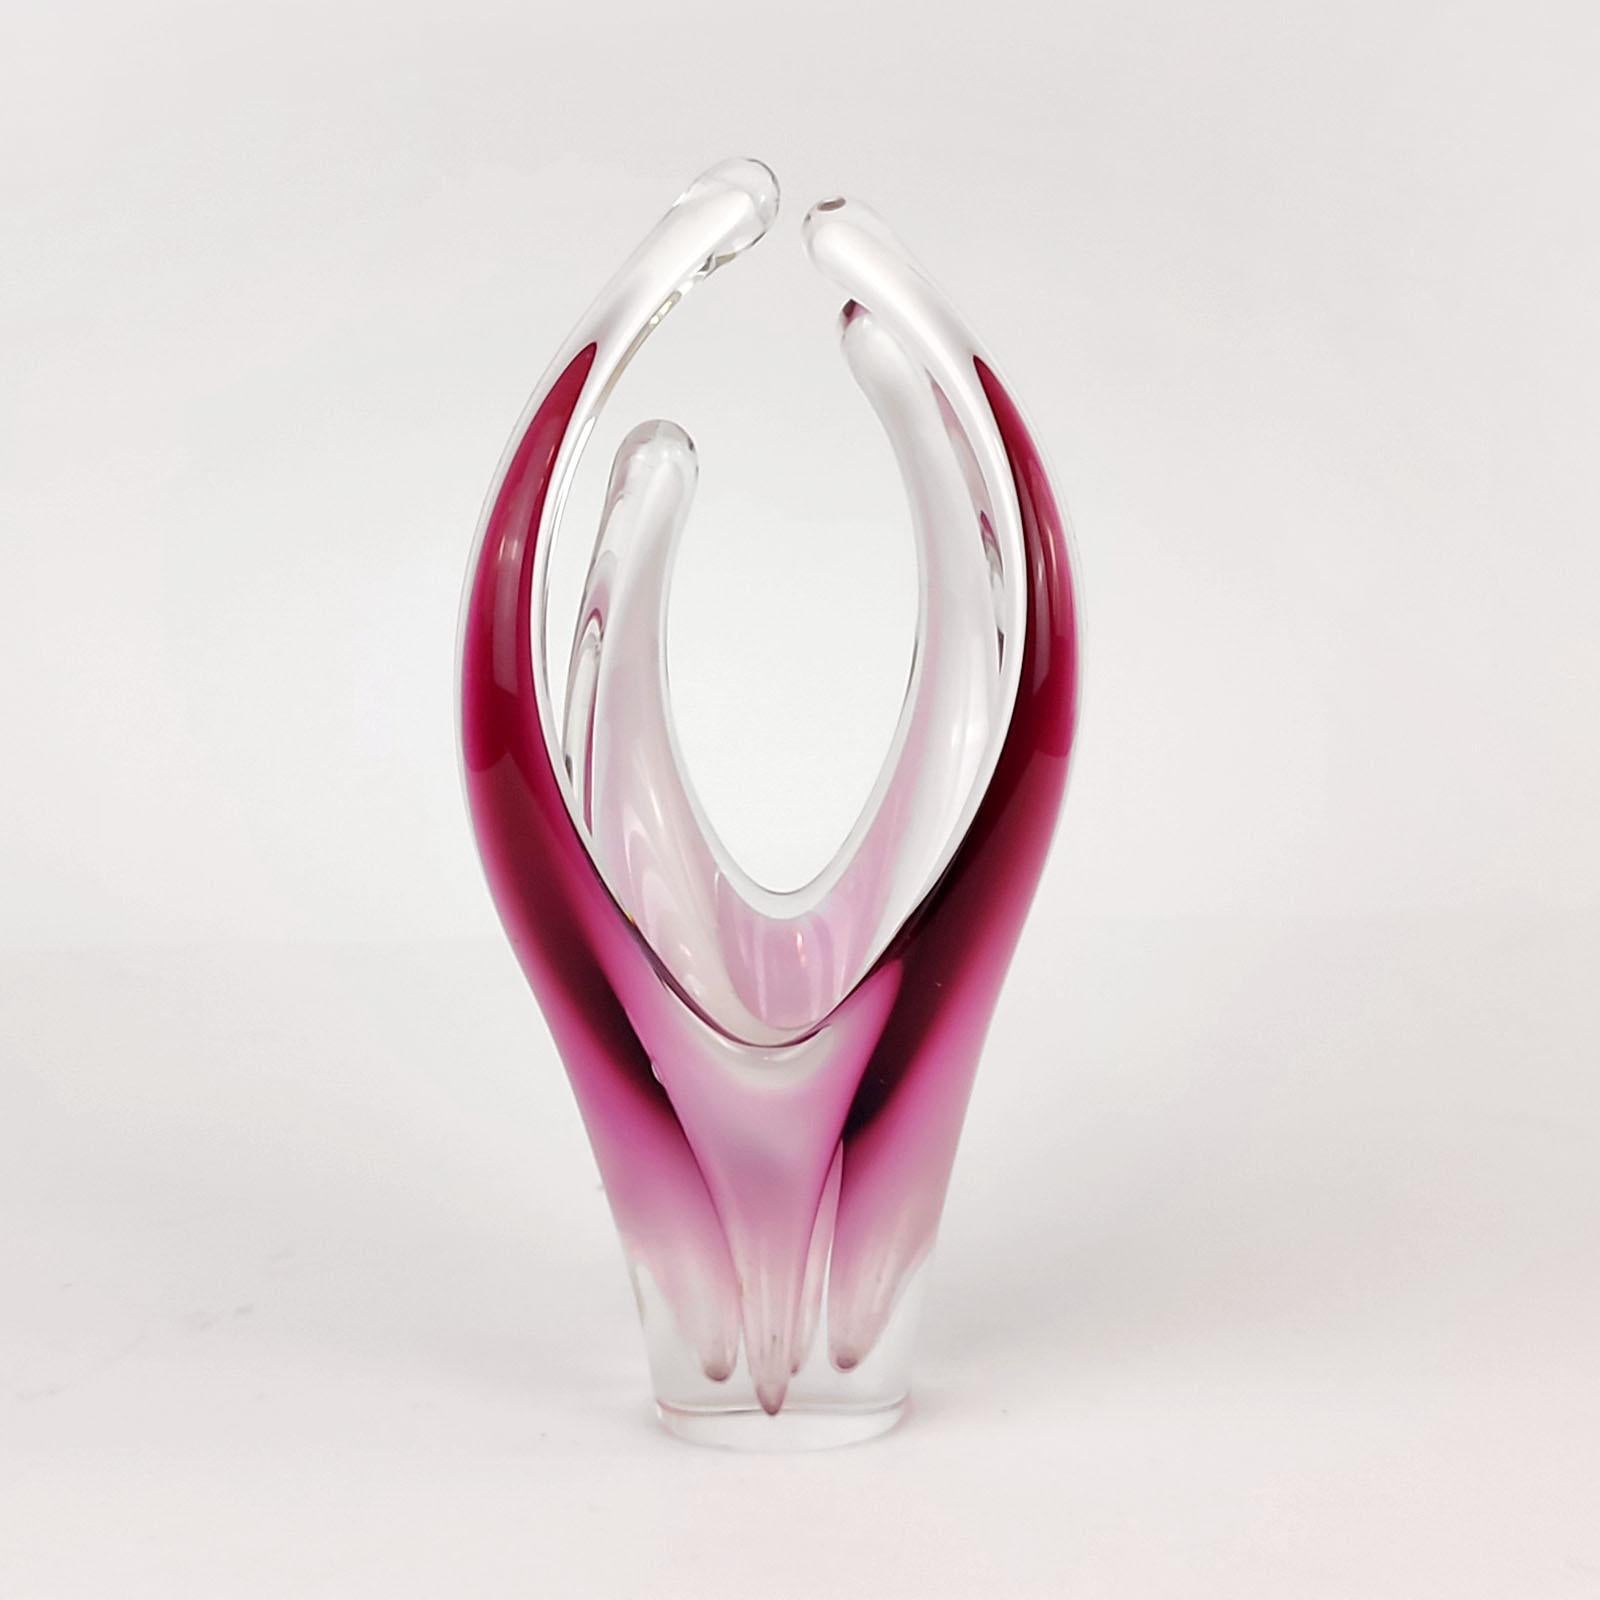 Paul Kedelv Flygsfors Coquille Crystal Art Sculpture Vase Scandinavian Glass For Sale 1